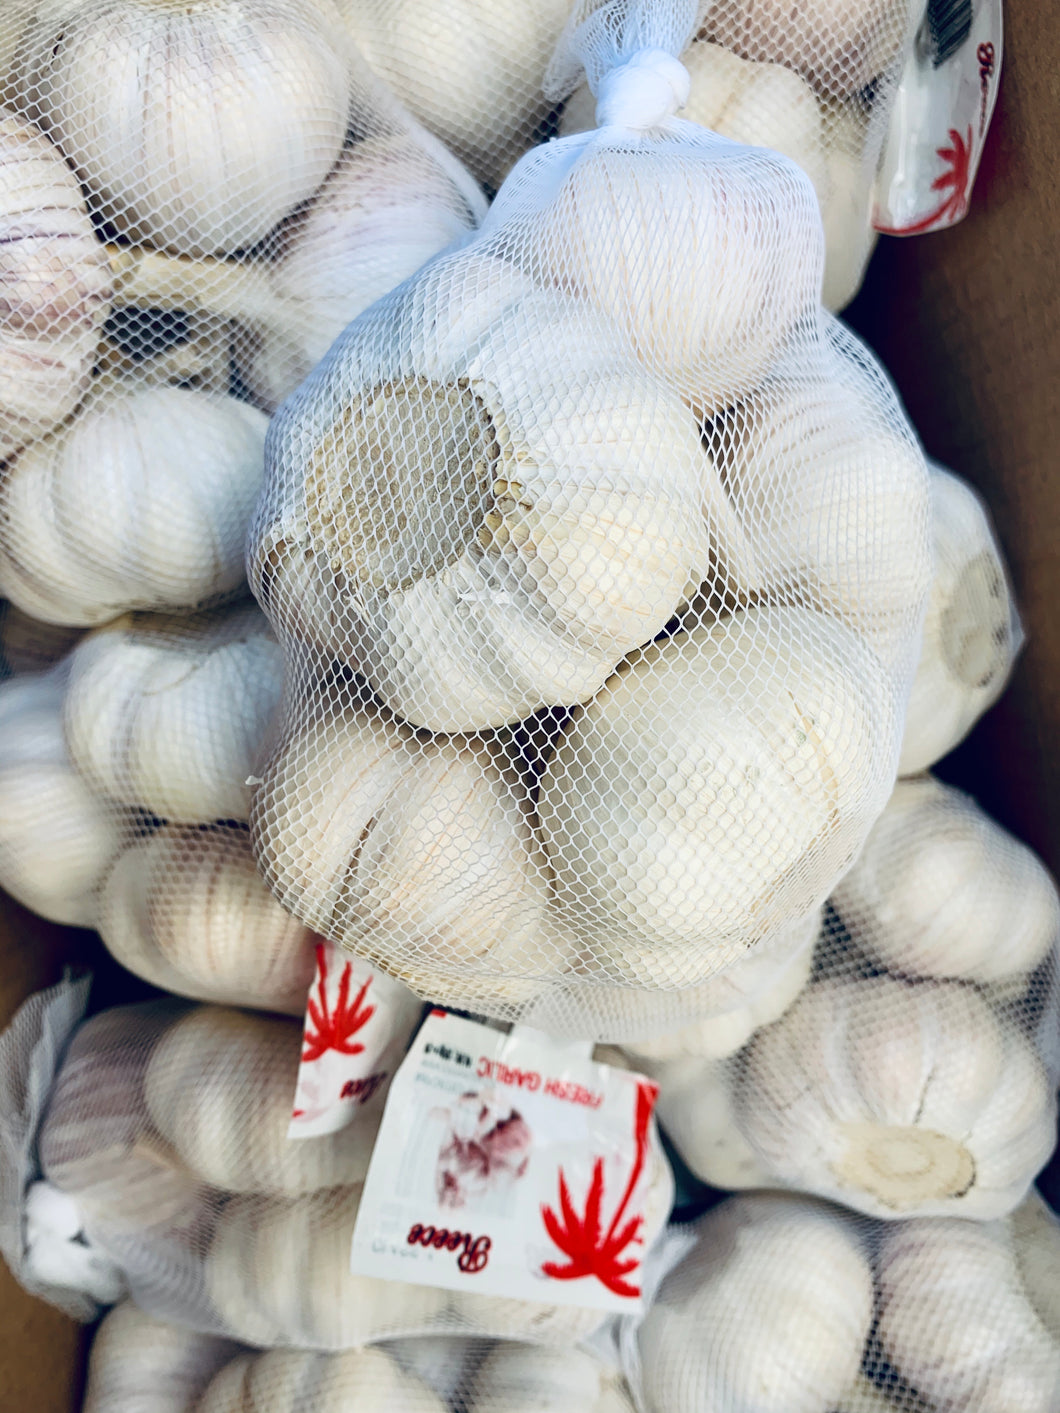 Garlic net - 400g